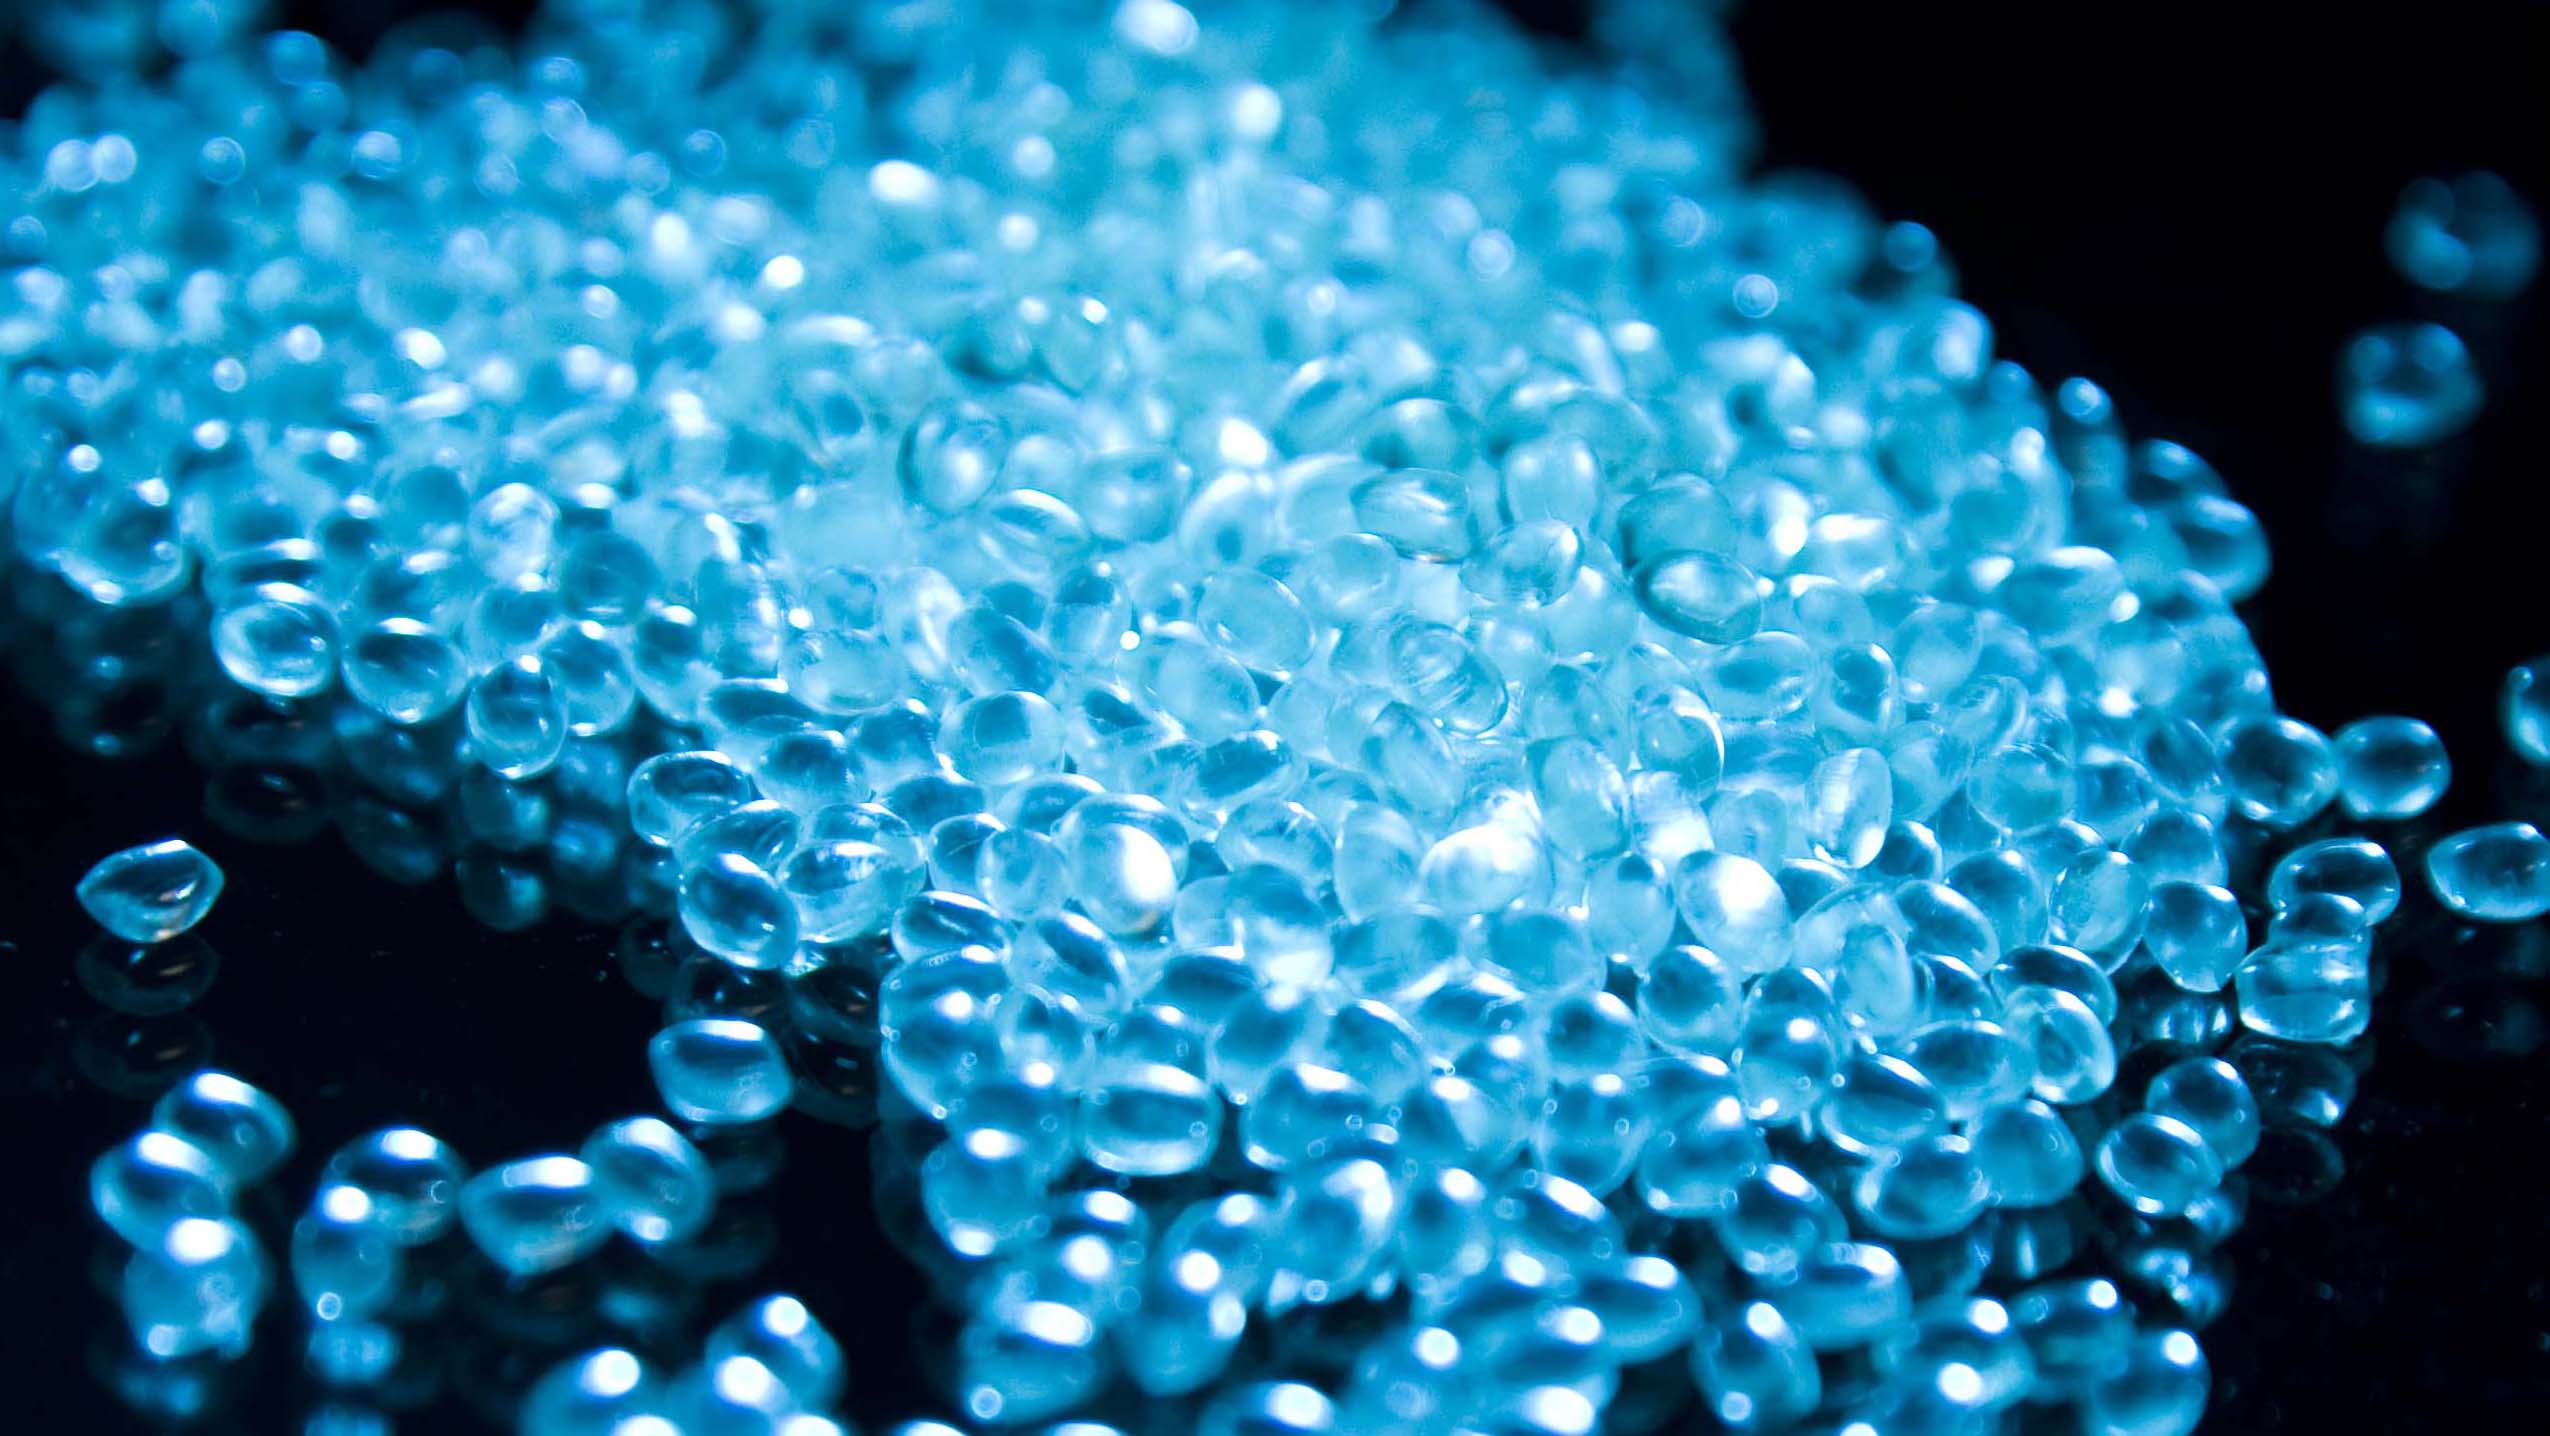 glowing blue pulymer pellets on a black background